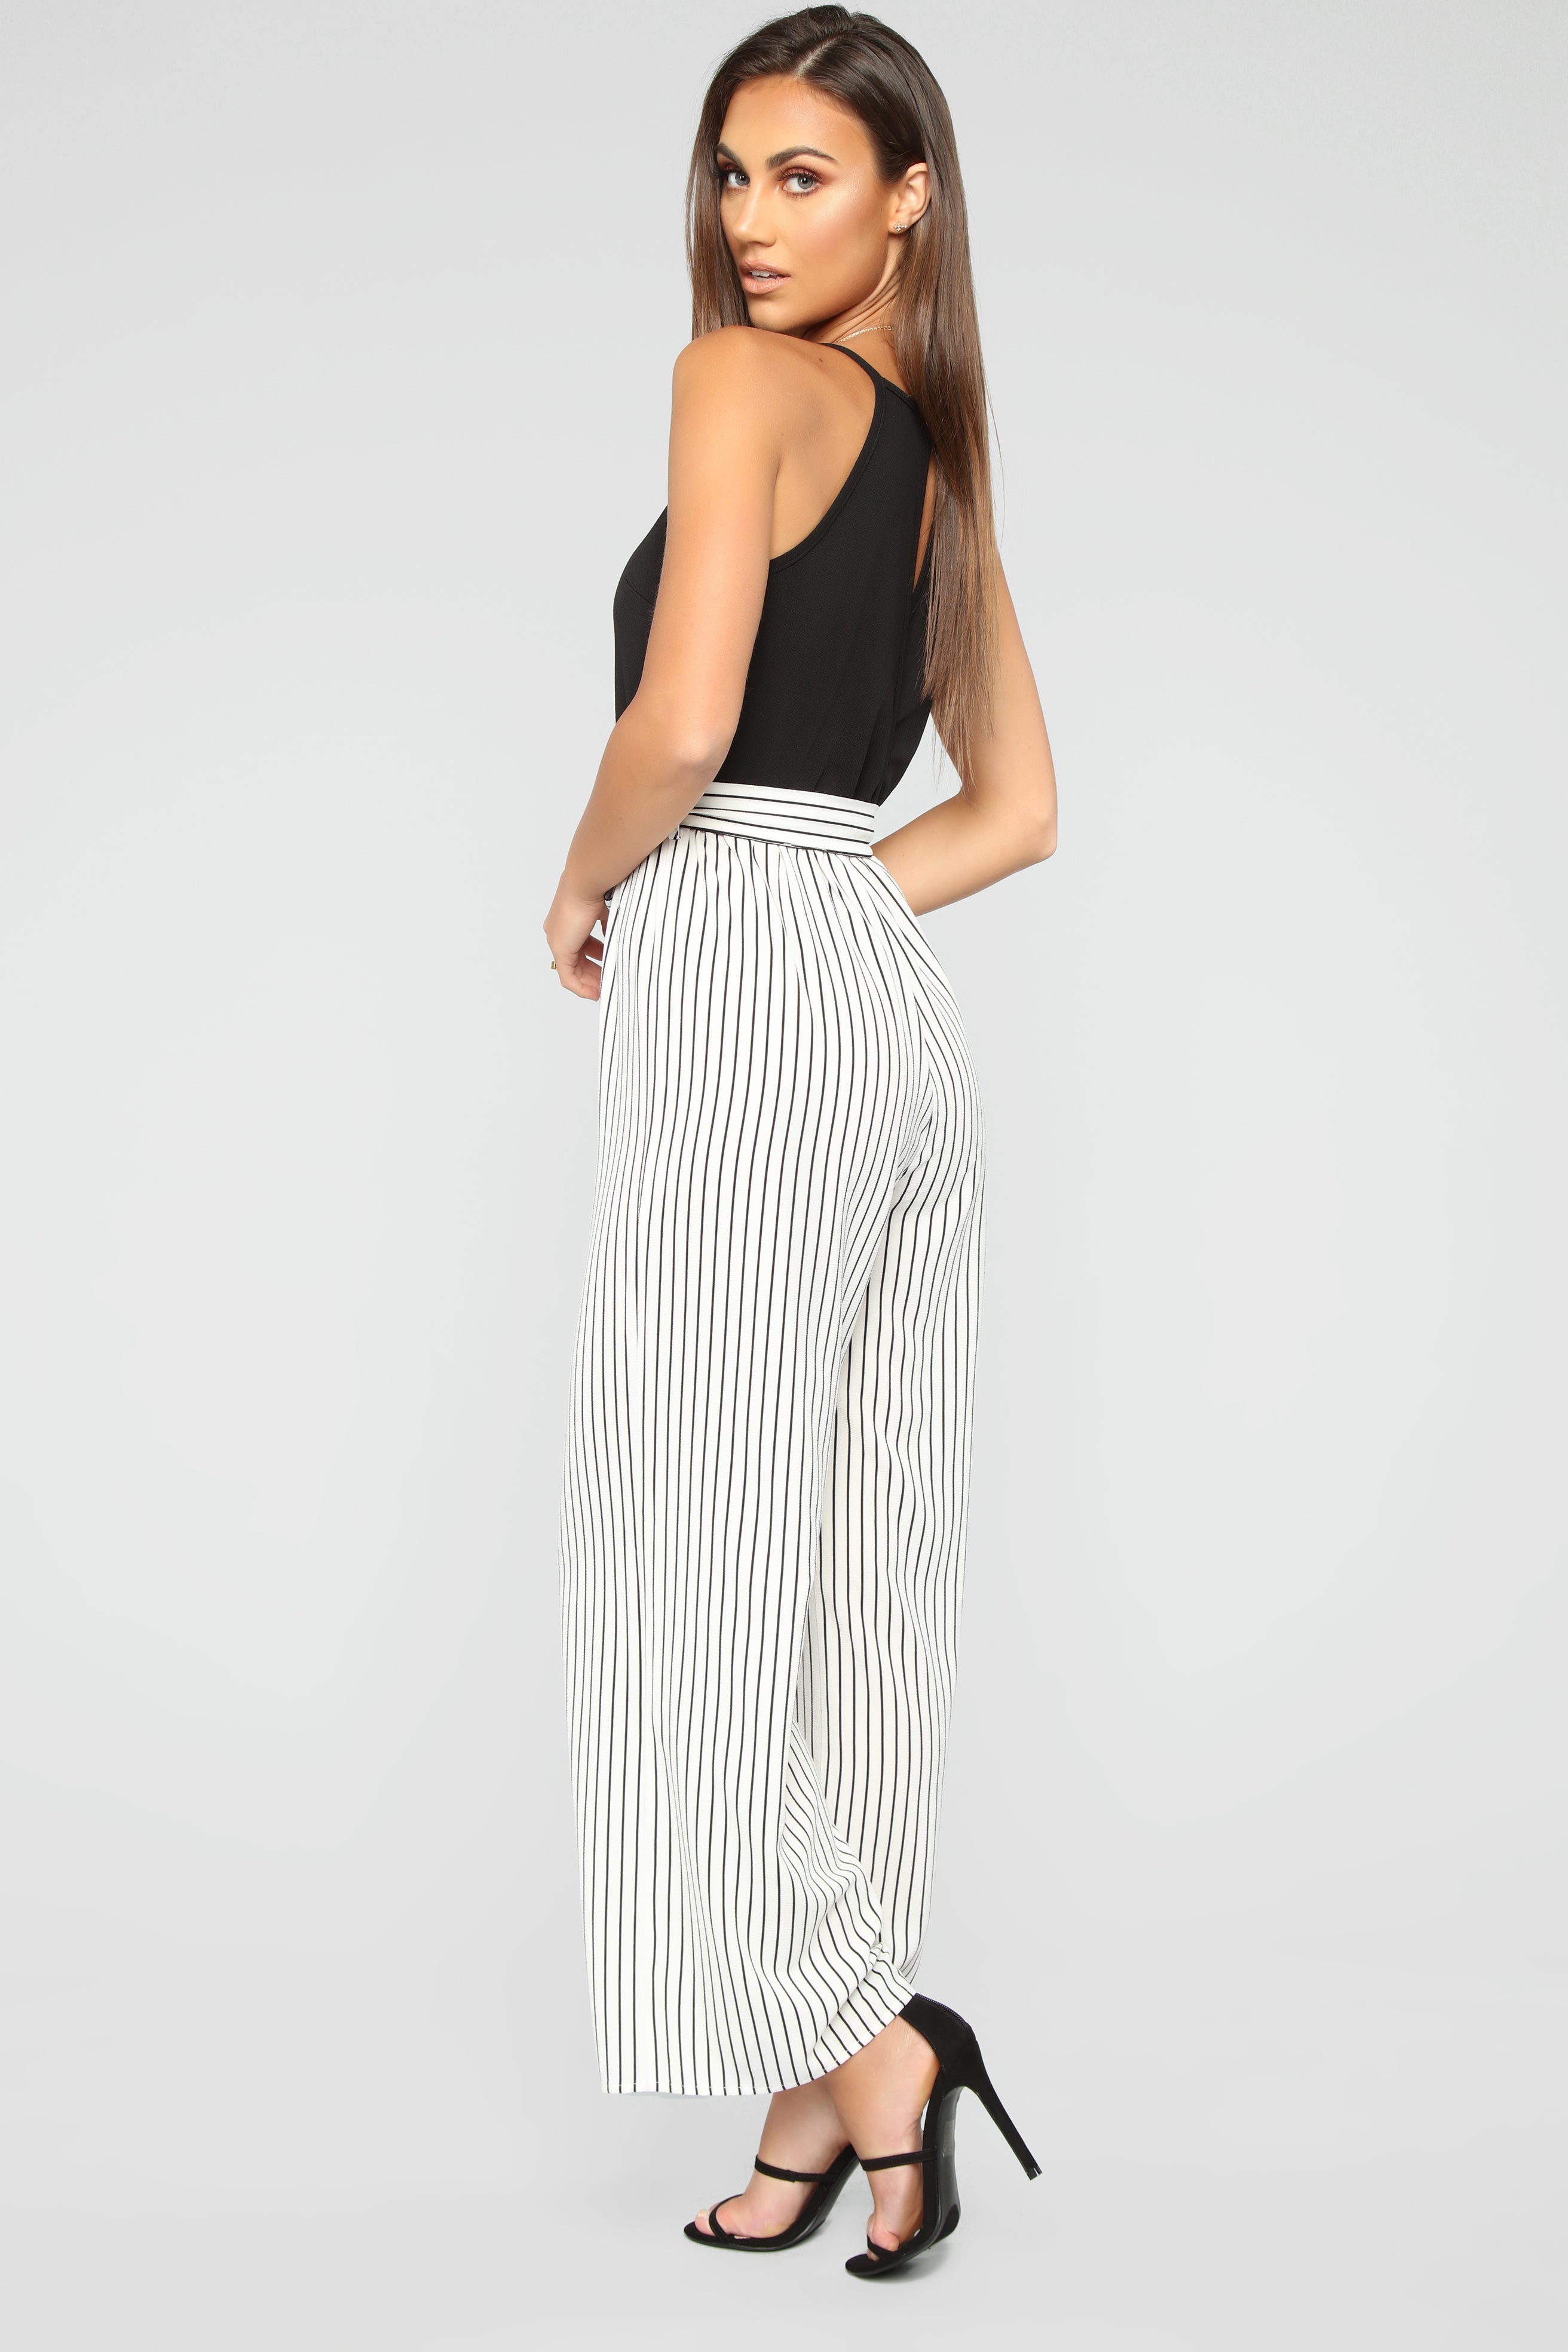 See The Sights Stripe Jumpsuit - Off White/Black – Fashion Nova